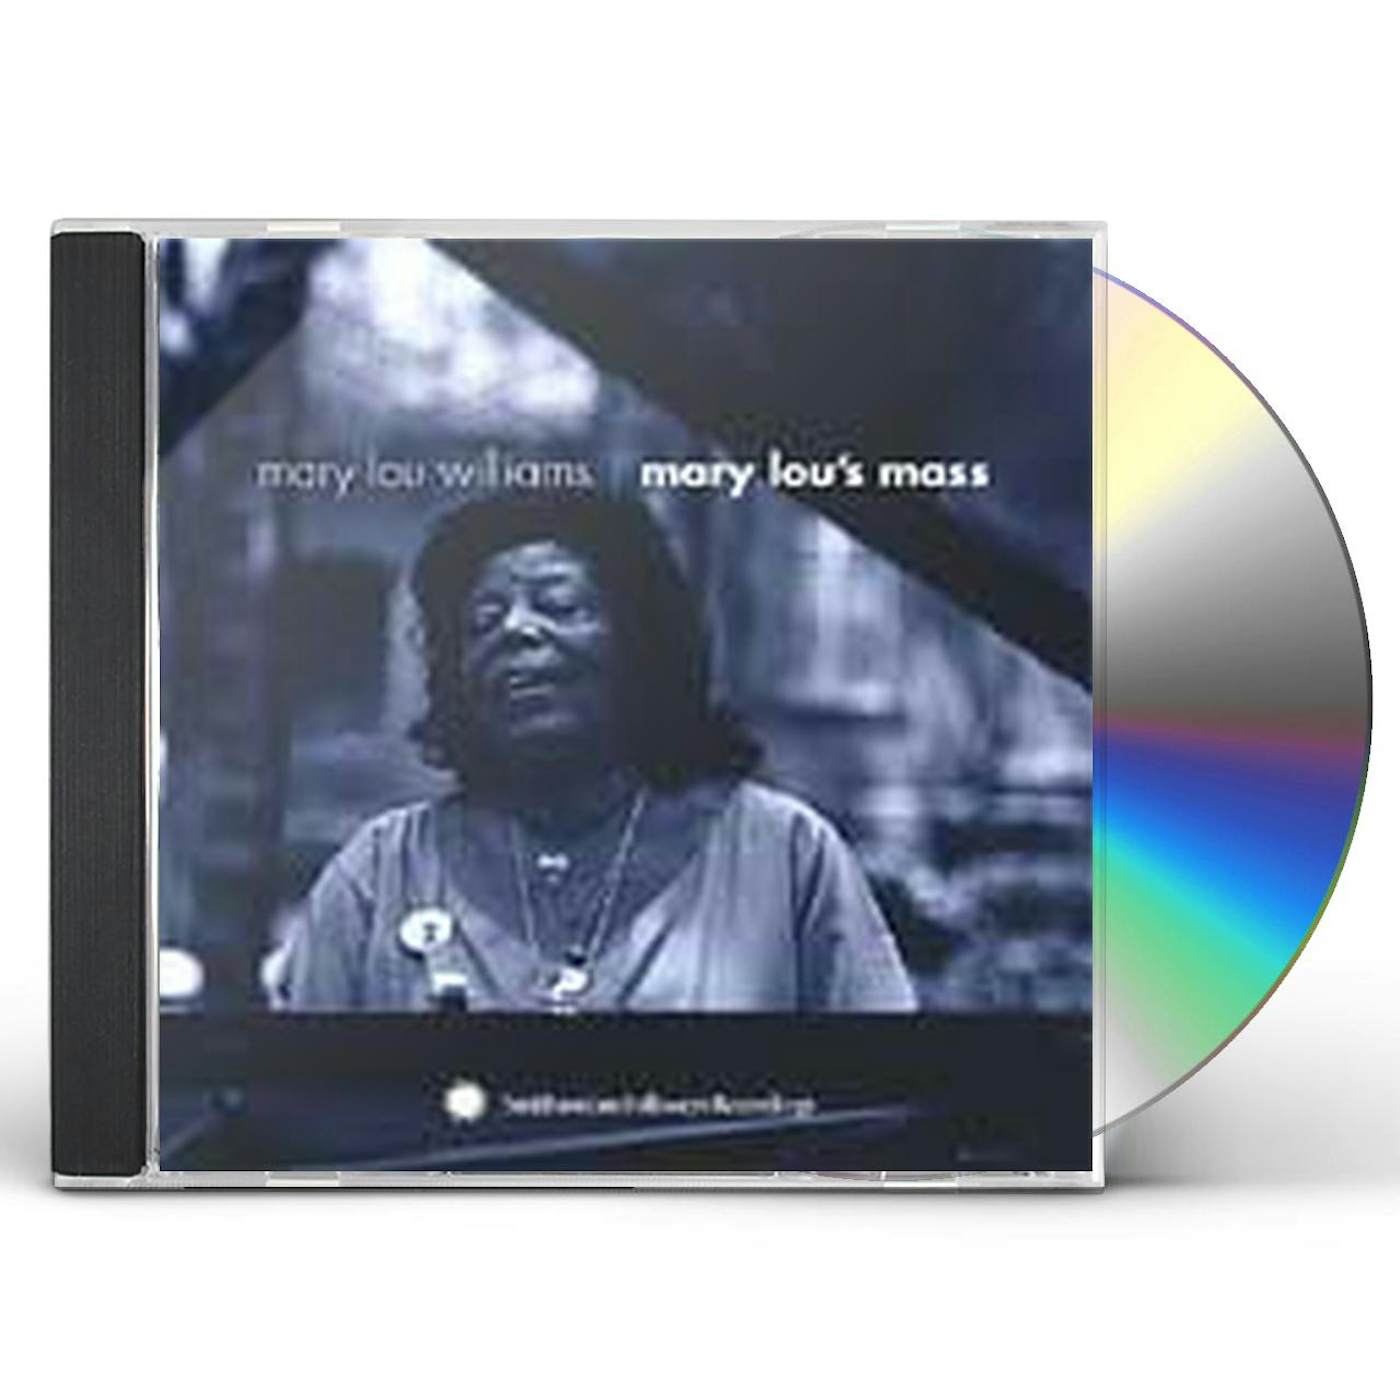 Mary Lou Williams MARY LOUS MASS CD